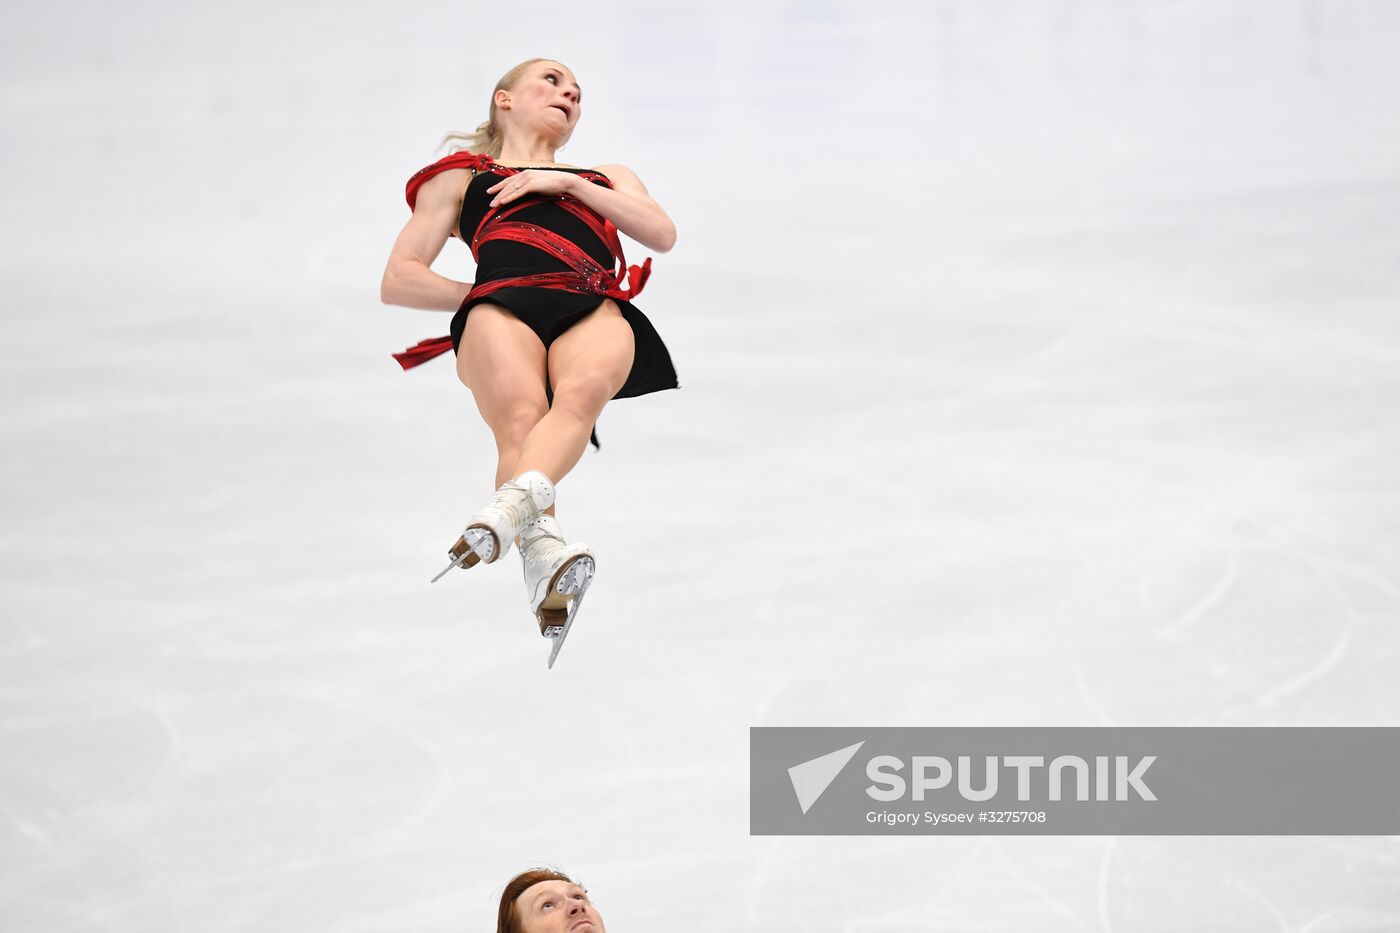 European Figure Skating Championships. Pairs' short program